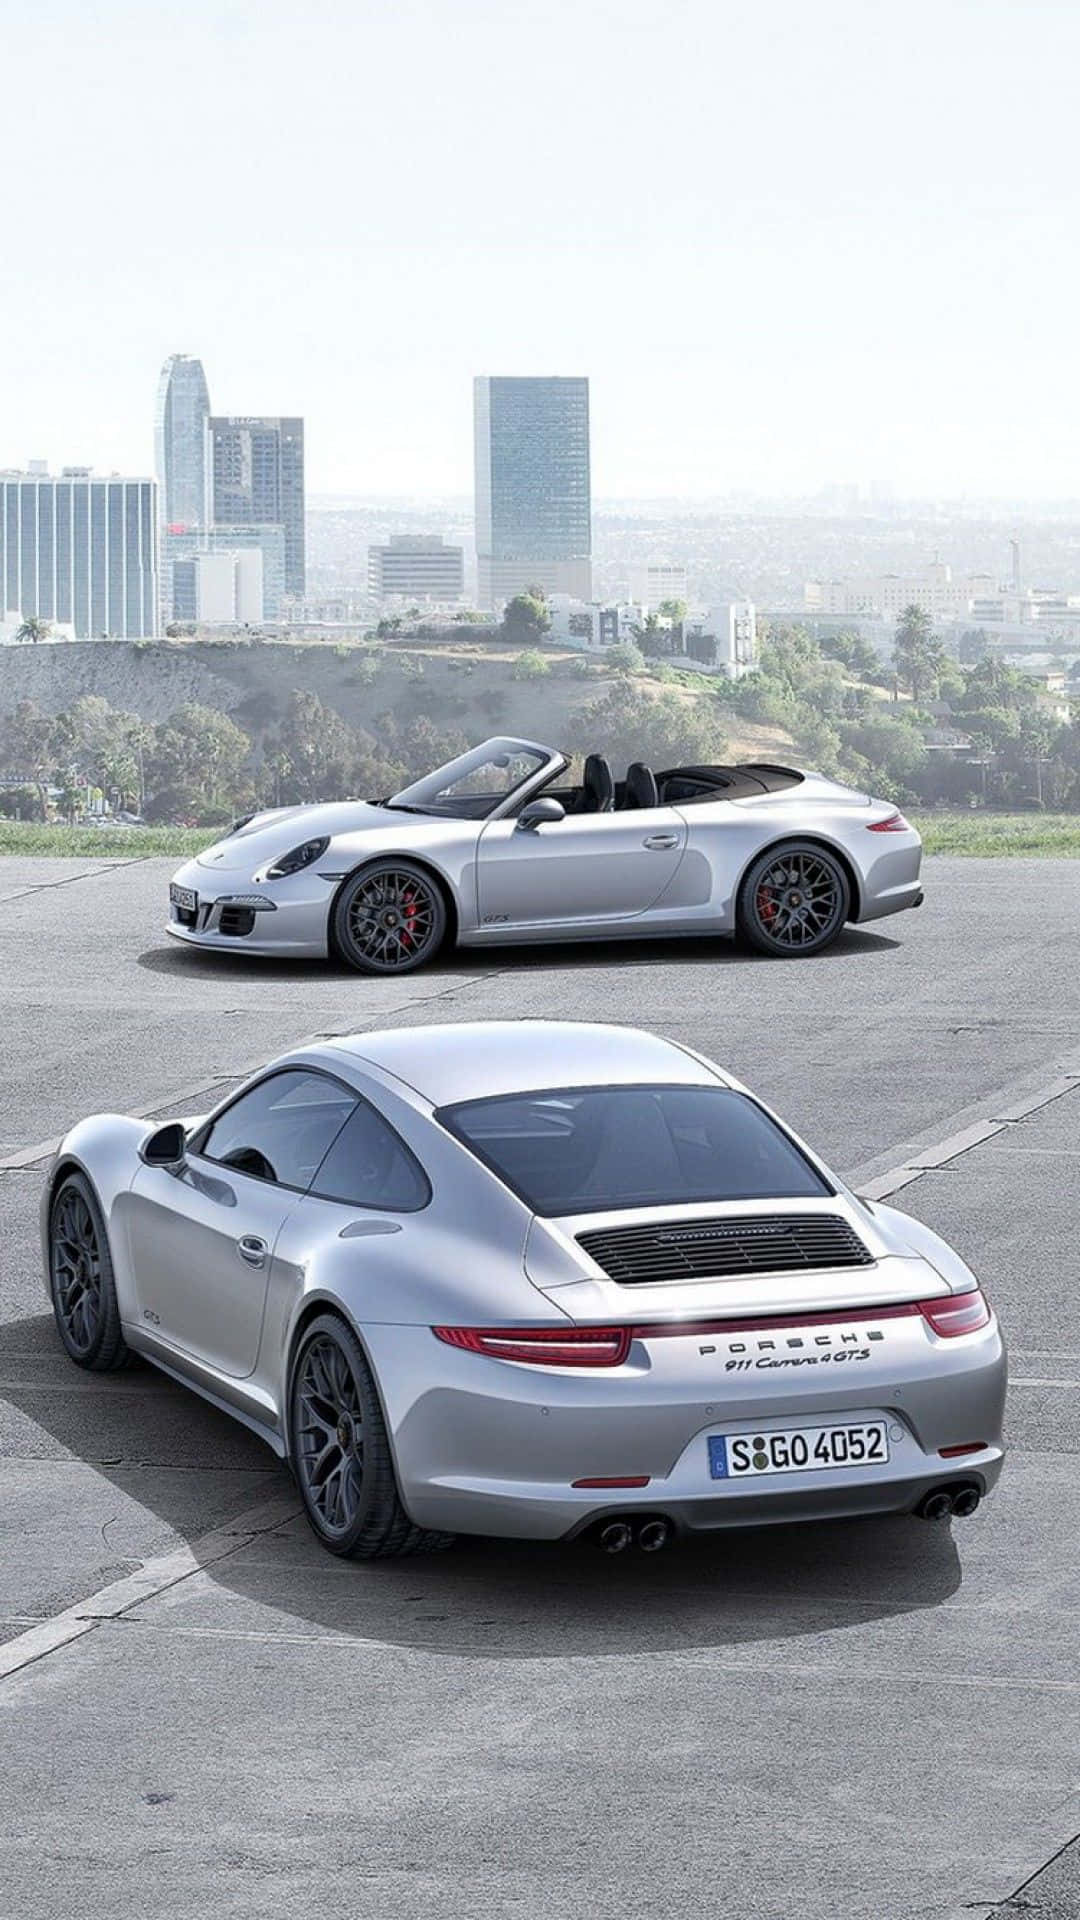 Captivating Porsche iPhone Wallpaper Wallpaper